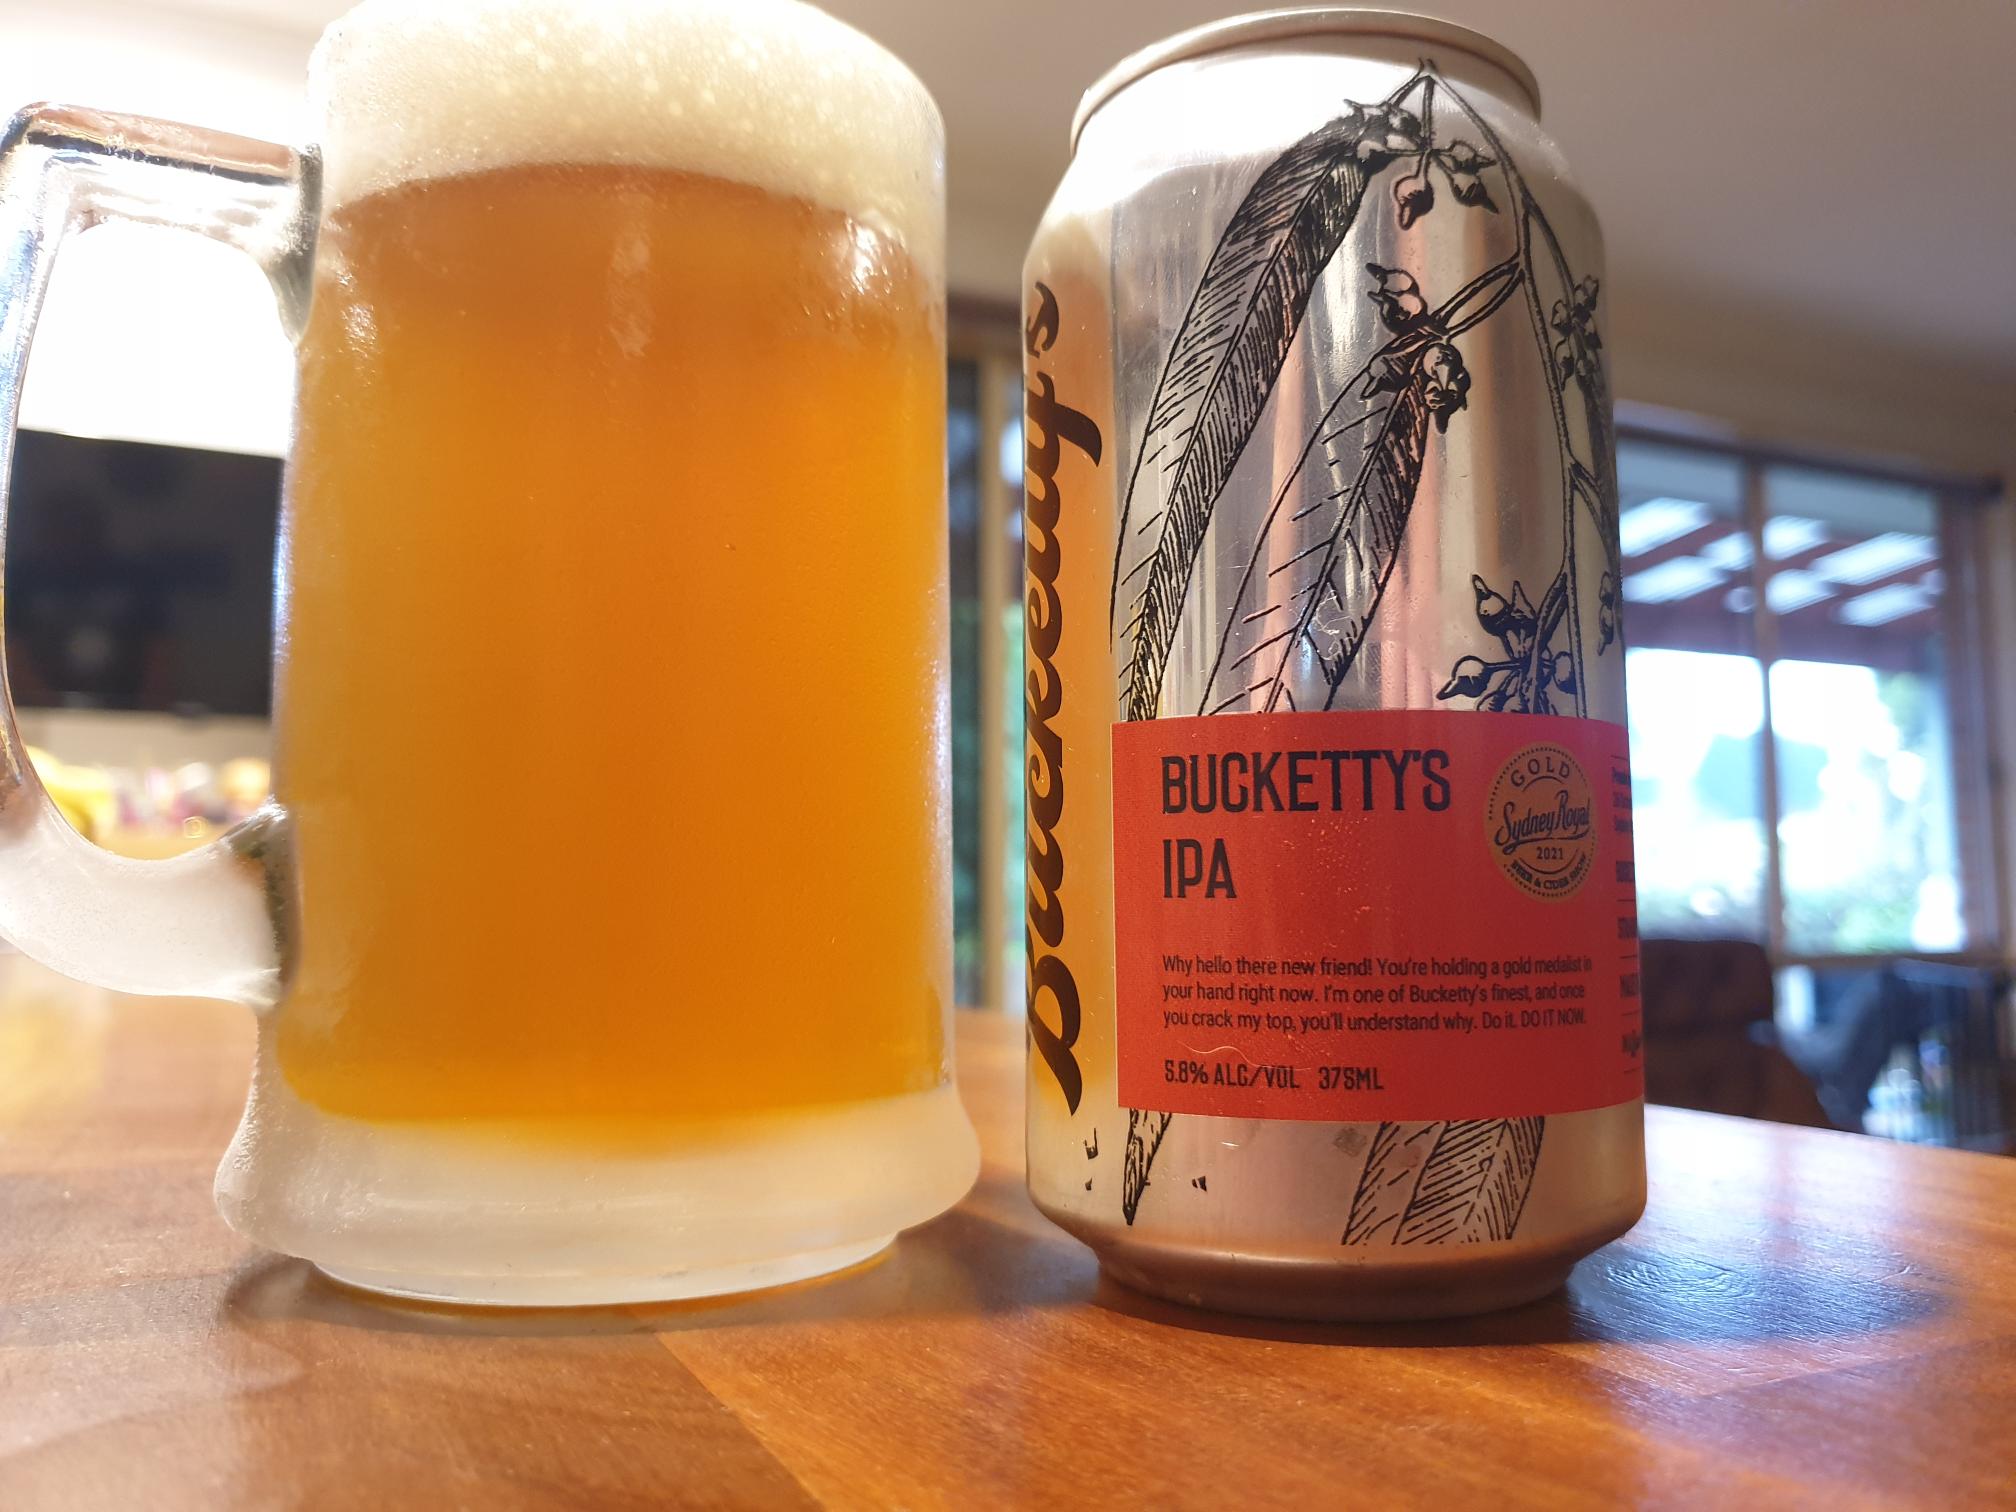 Bucketty’s IPA by Bucketty’s Brewing